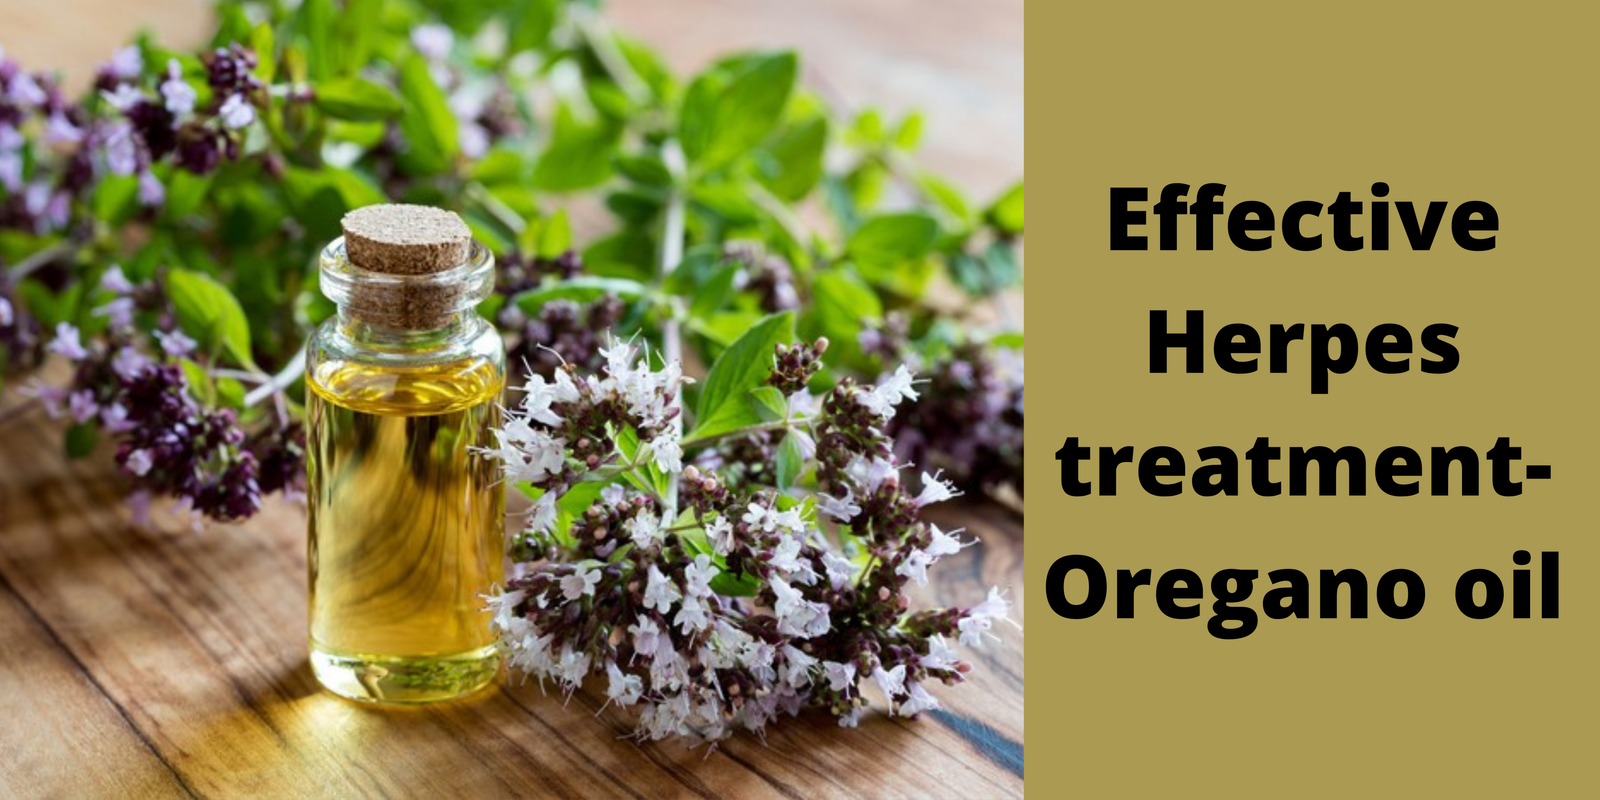 Effective herpes treatment-oregano oil